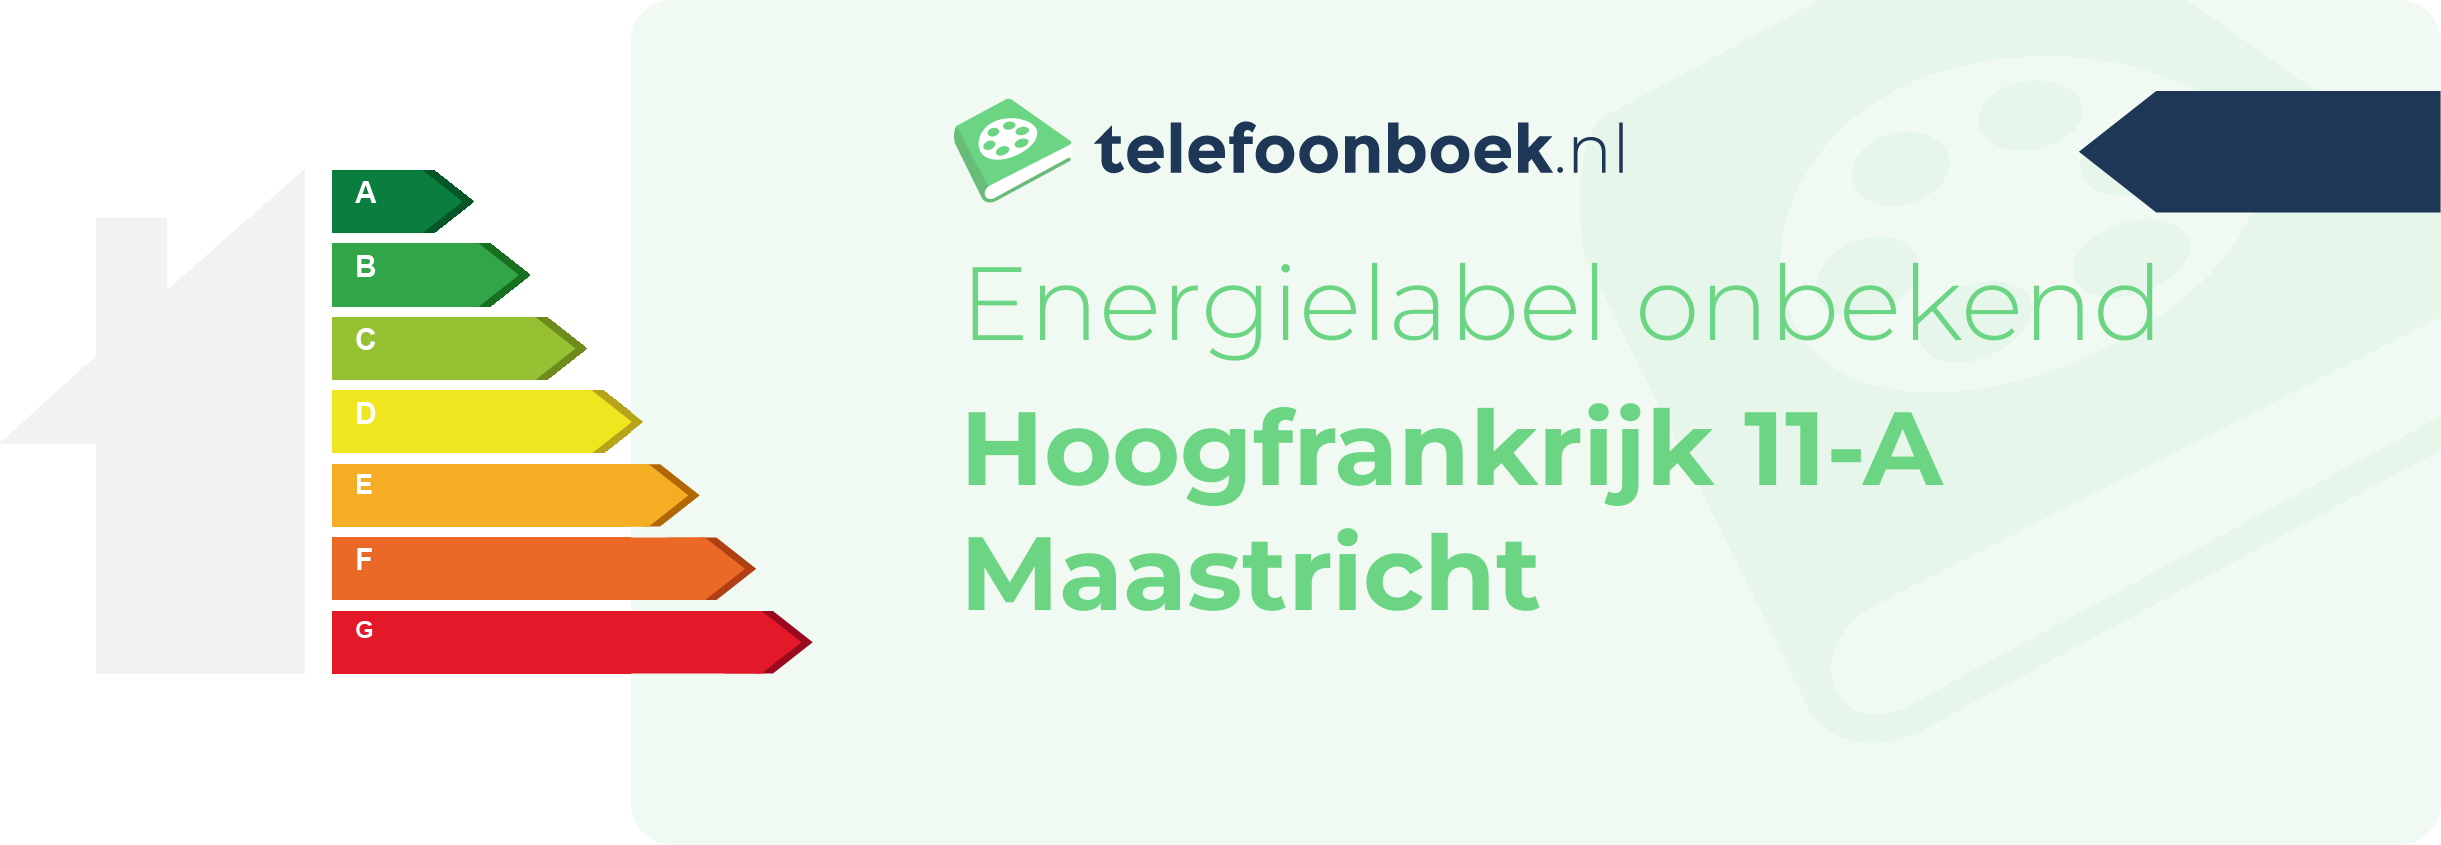 Energielabel Hoogfrankrijk 11-A Maastricht